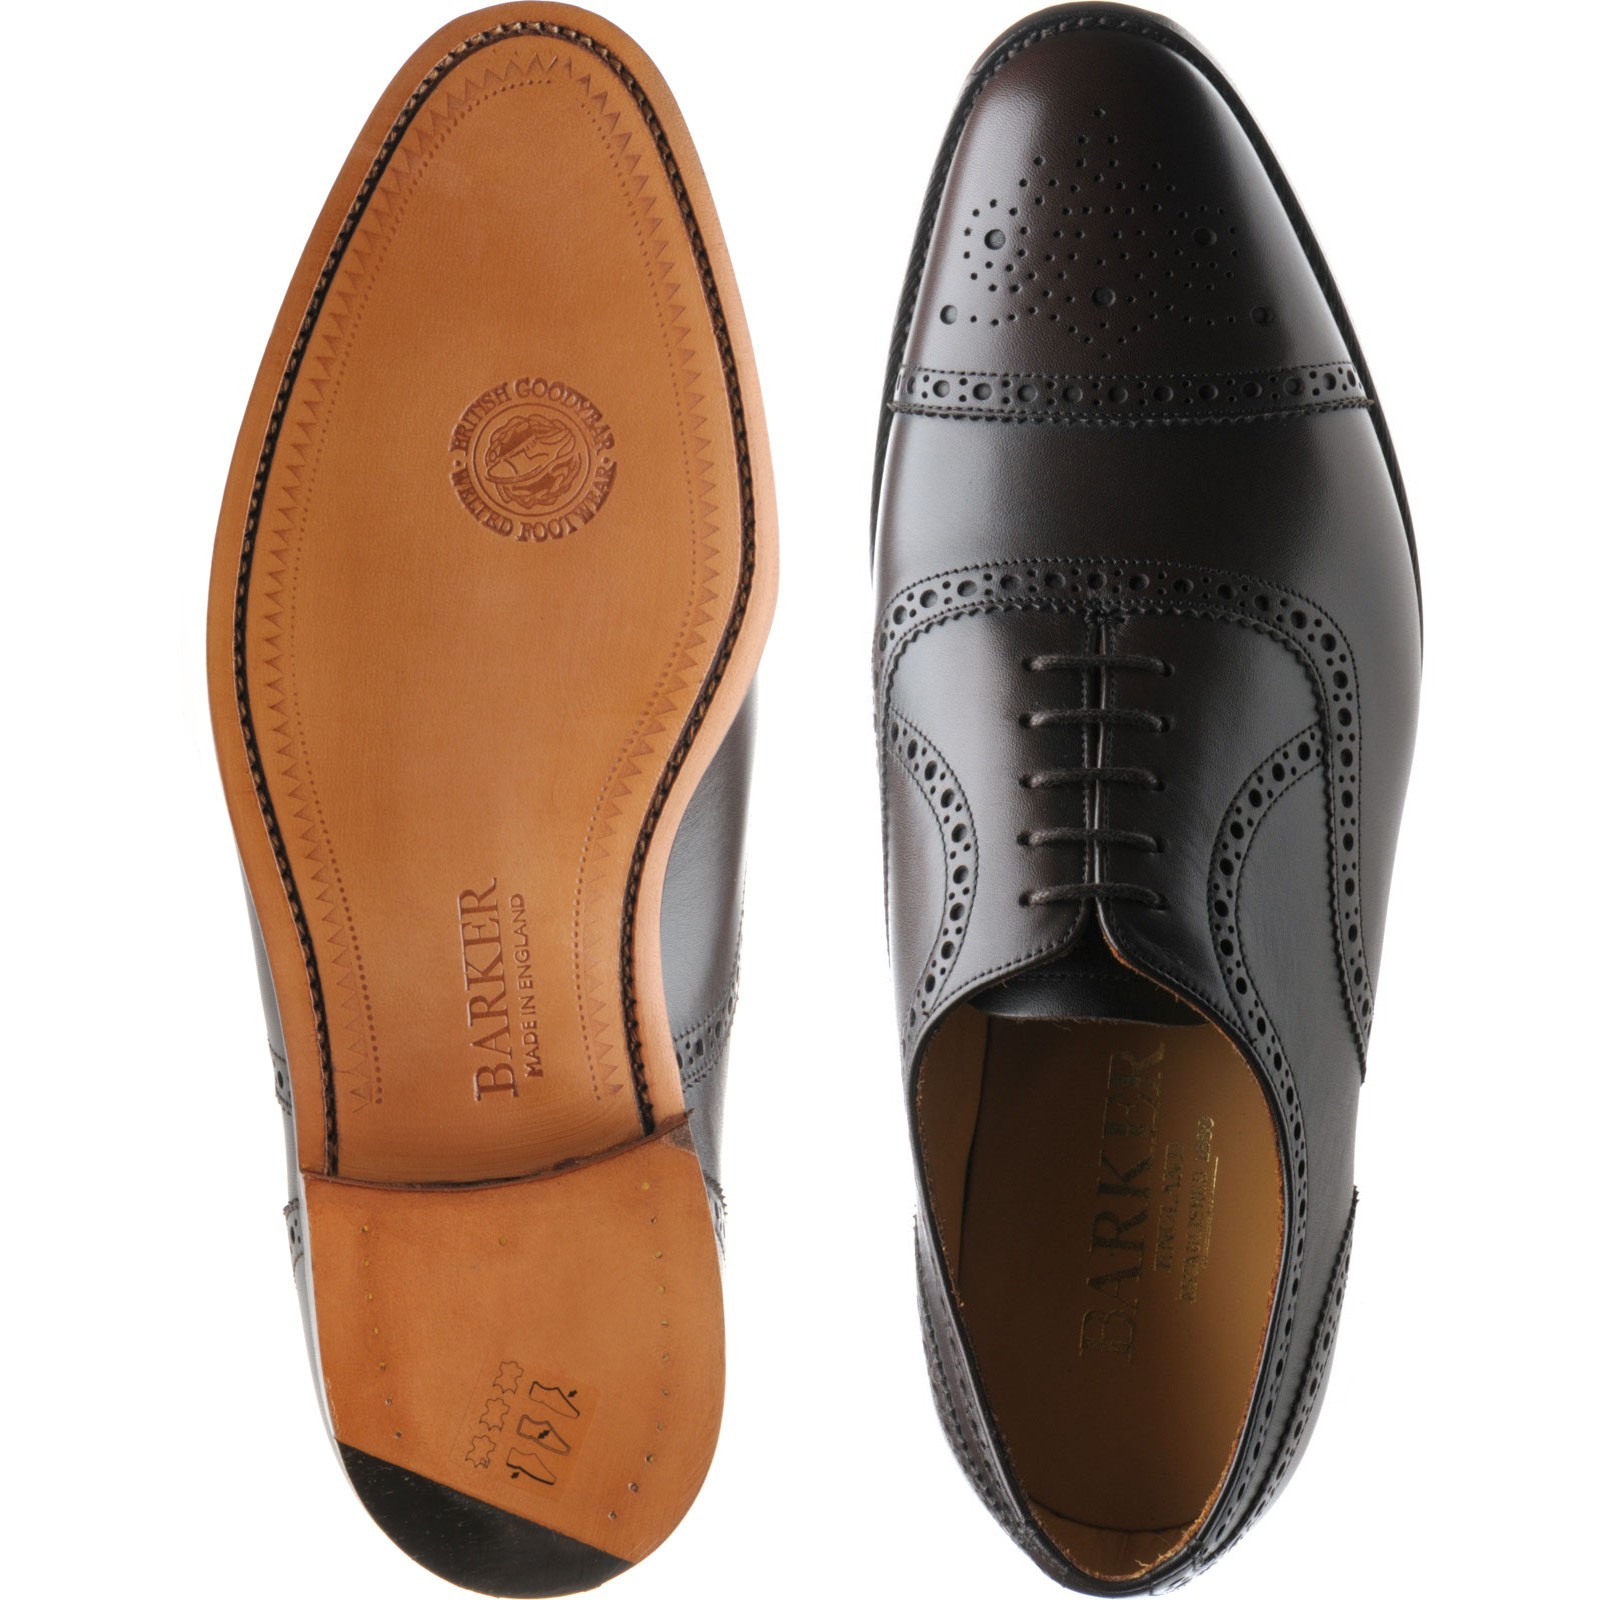 Barker shoes | Barker Professional | Mirfield semi-brogues in Espresso ...